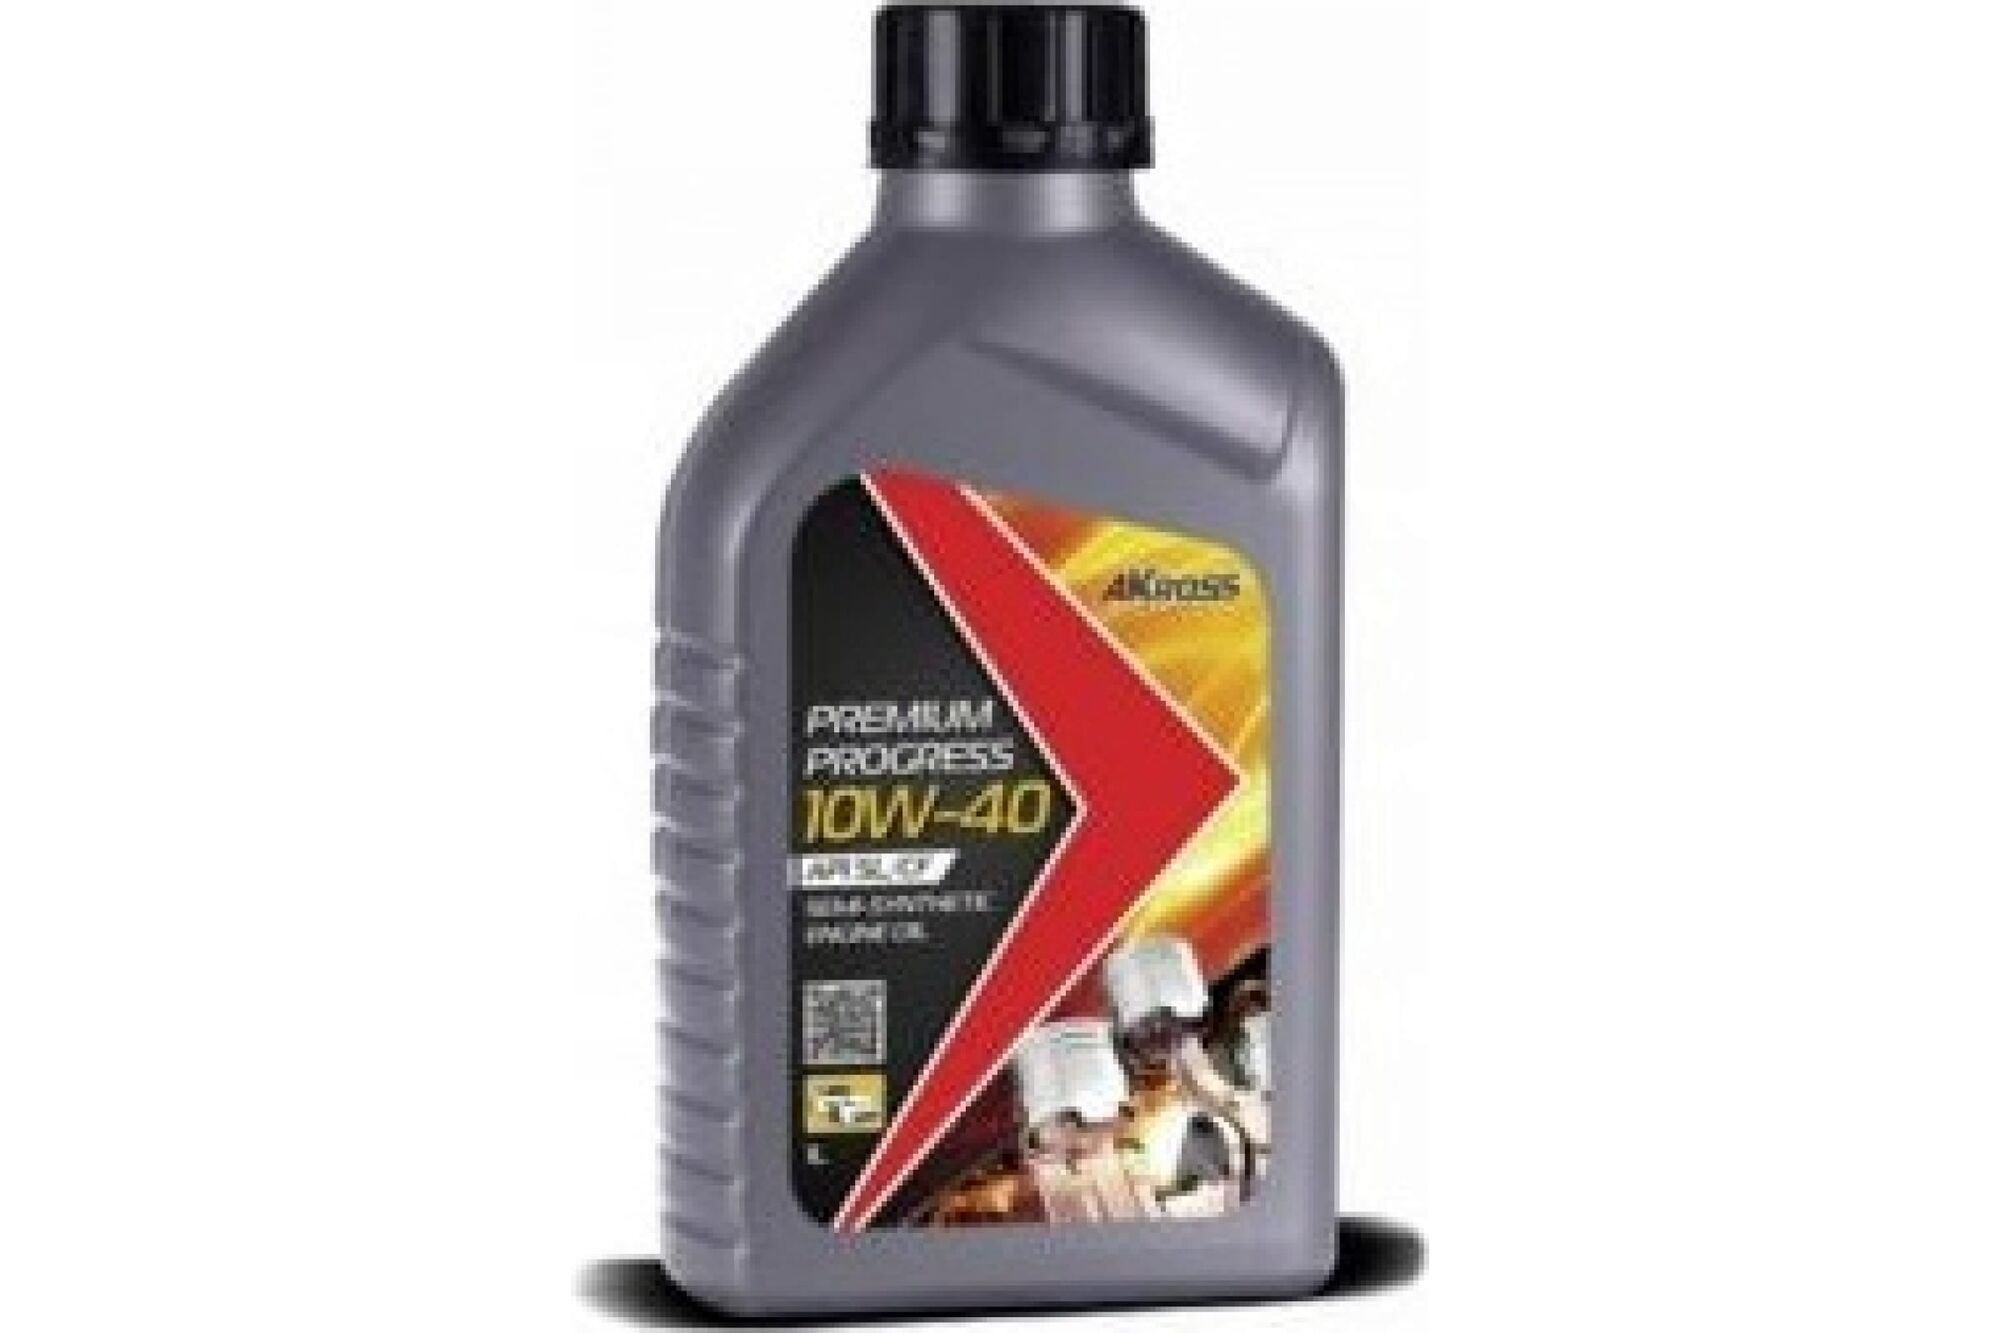 Моторное масло AKross PREMIUM PROGRESS полусинтетическое, 10W-40, SL/CF, 1 л AKS0001MOS Premium